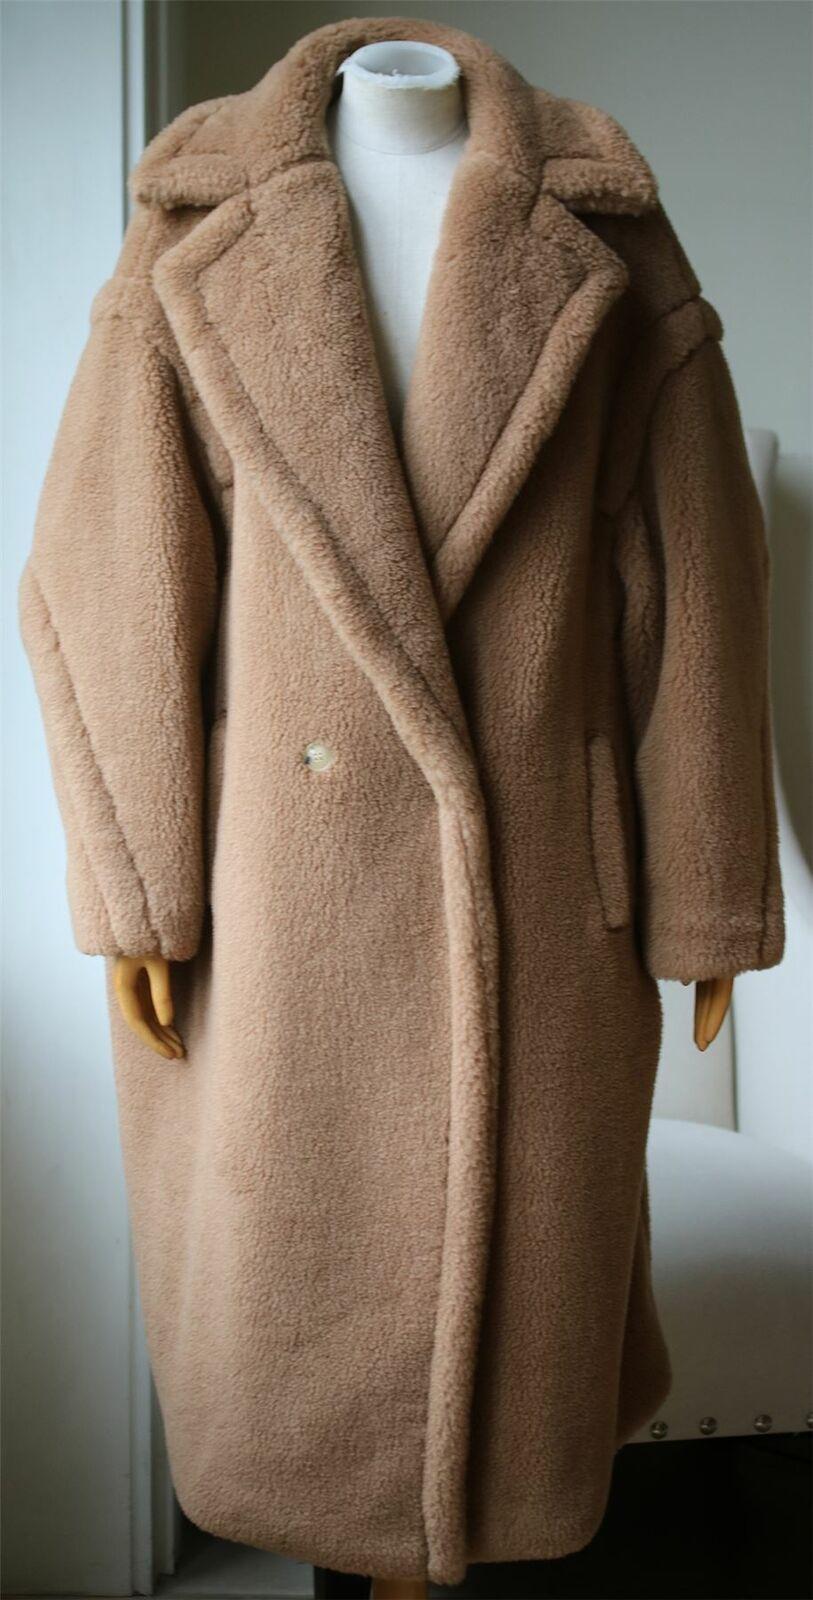 Max Mara Teddy Bear Coat - For Sale on 1stDibs